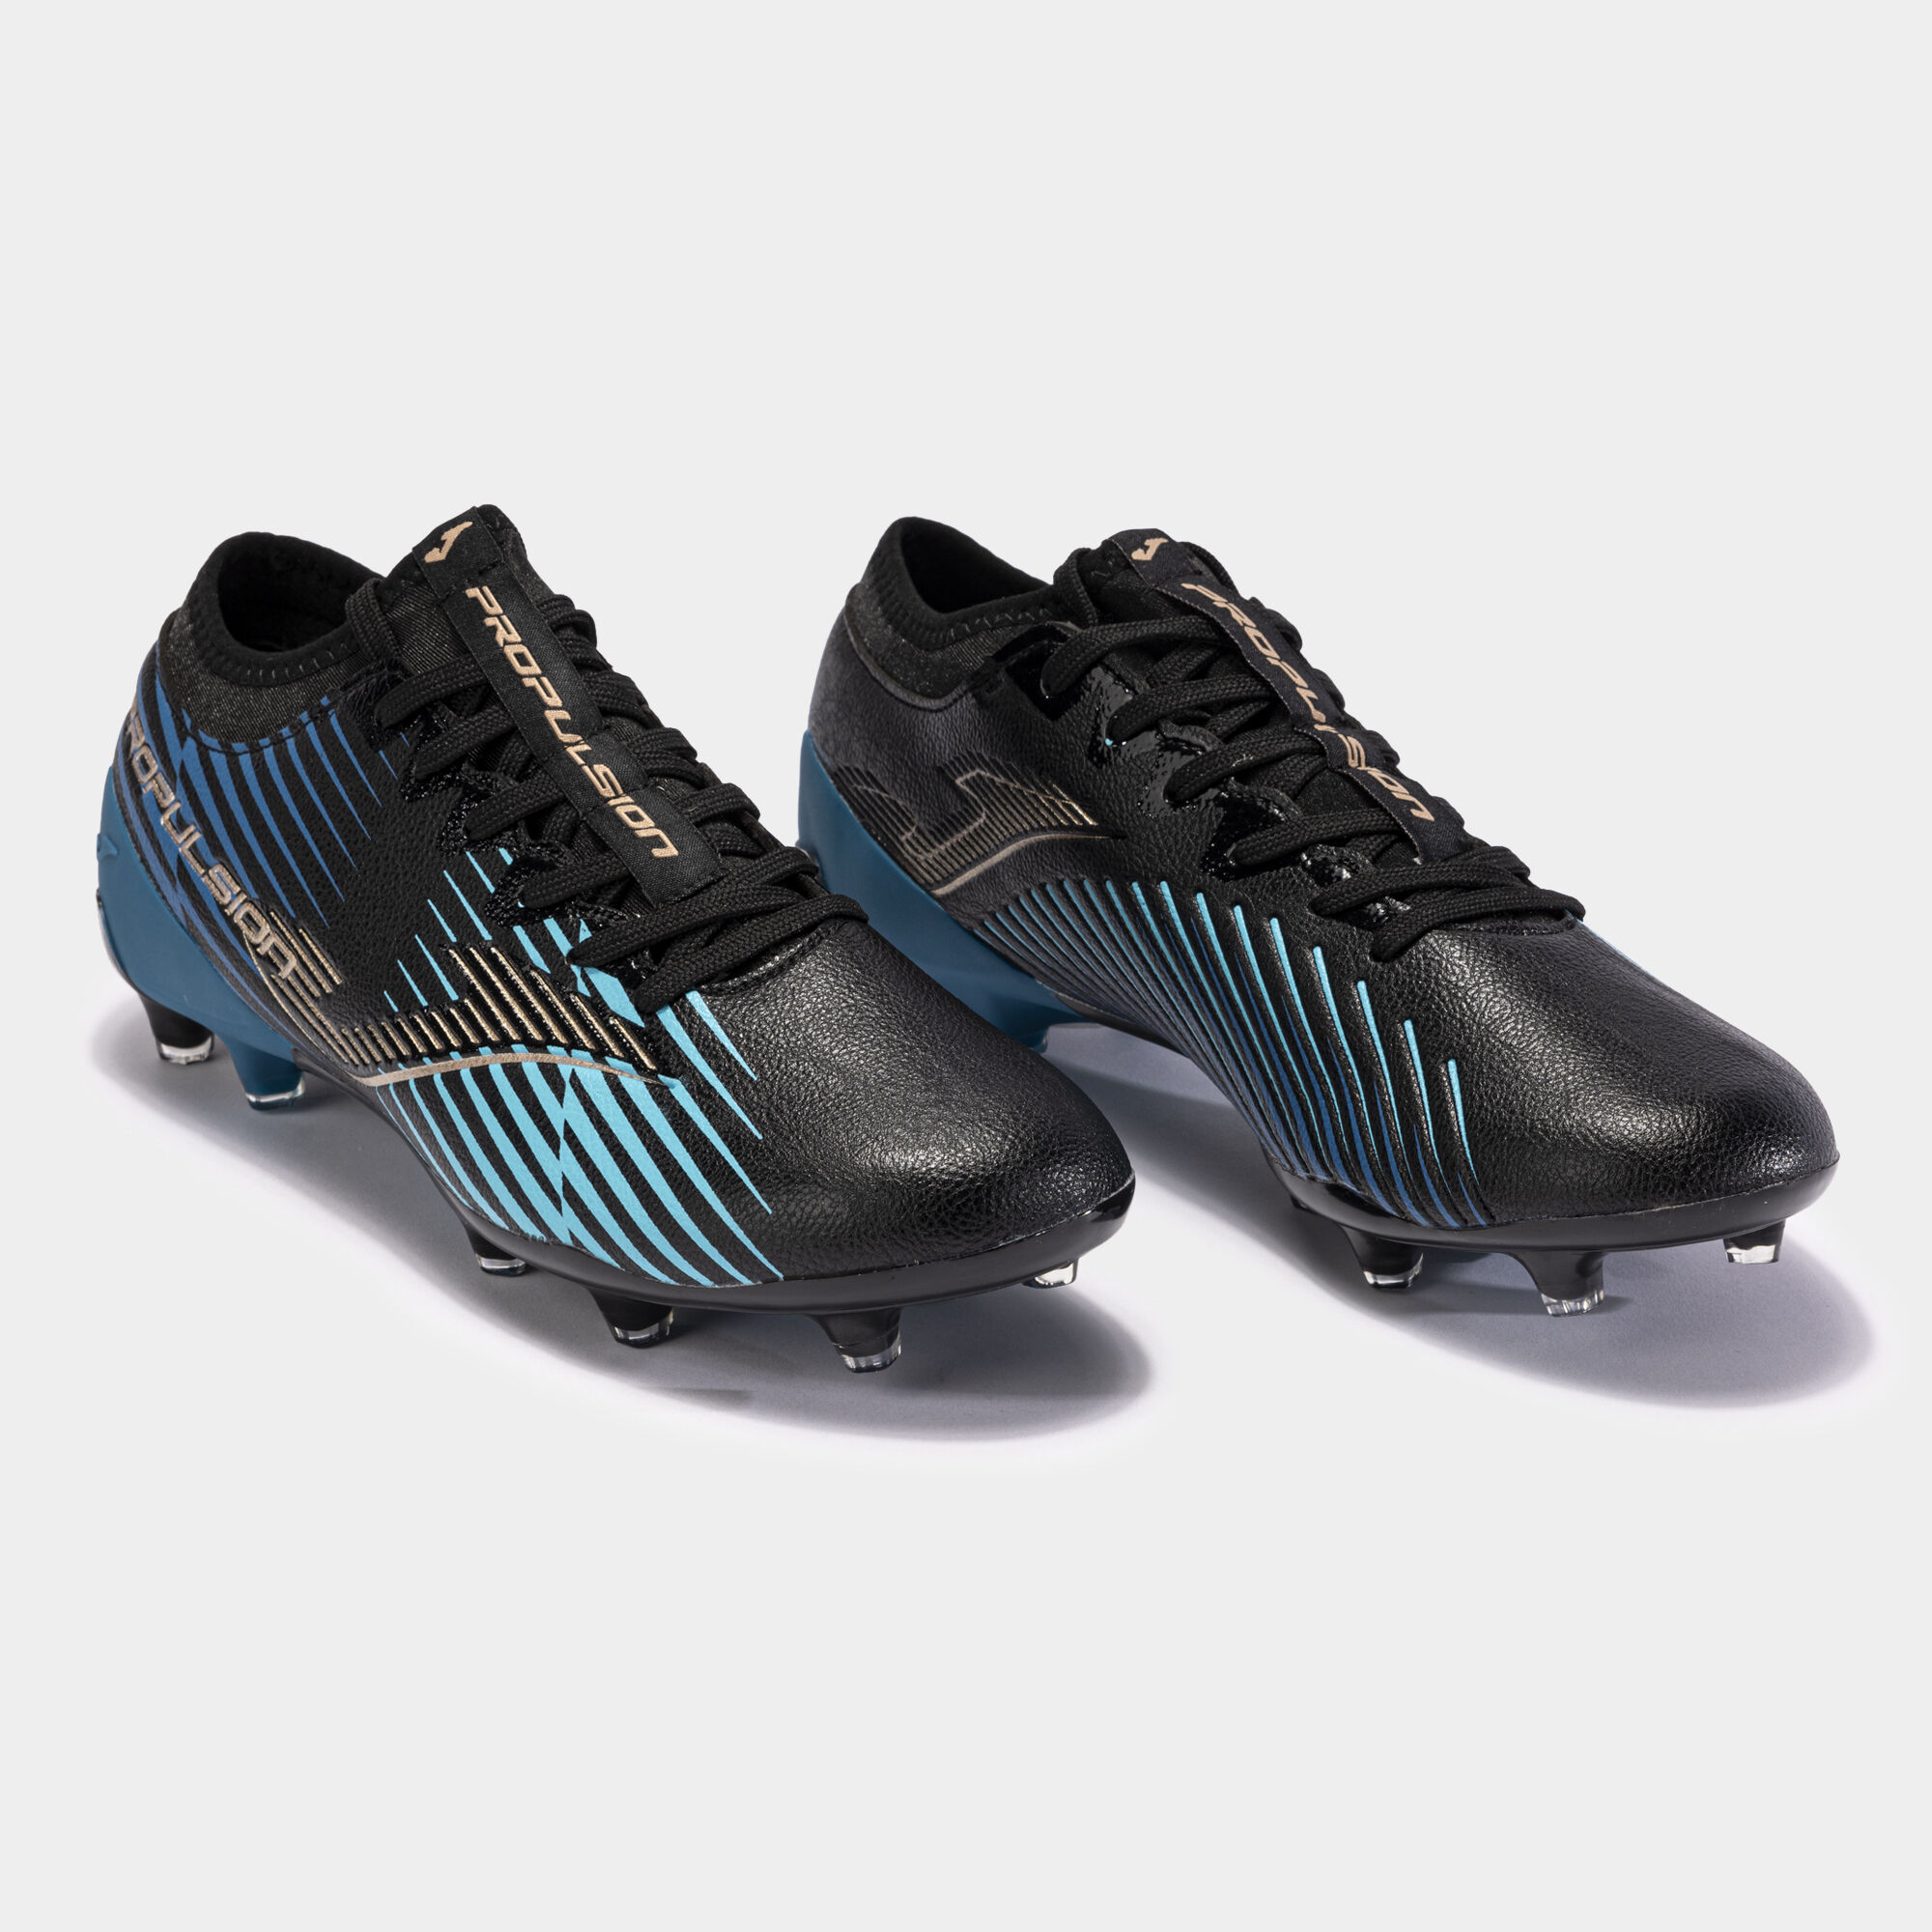 Chaussures football Propulsion Cup 23 terrain ferme FG noir bleu